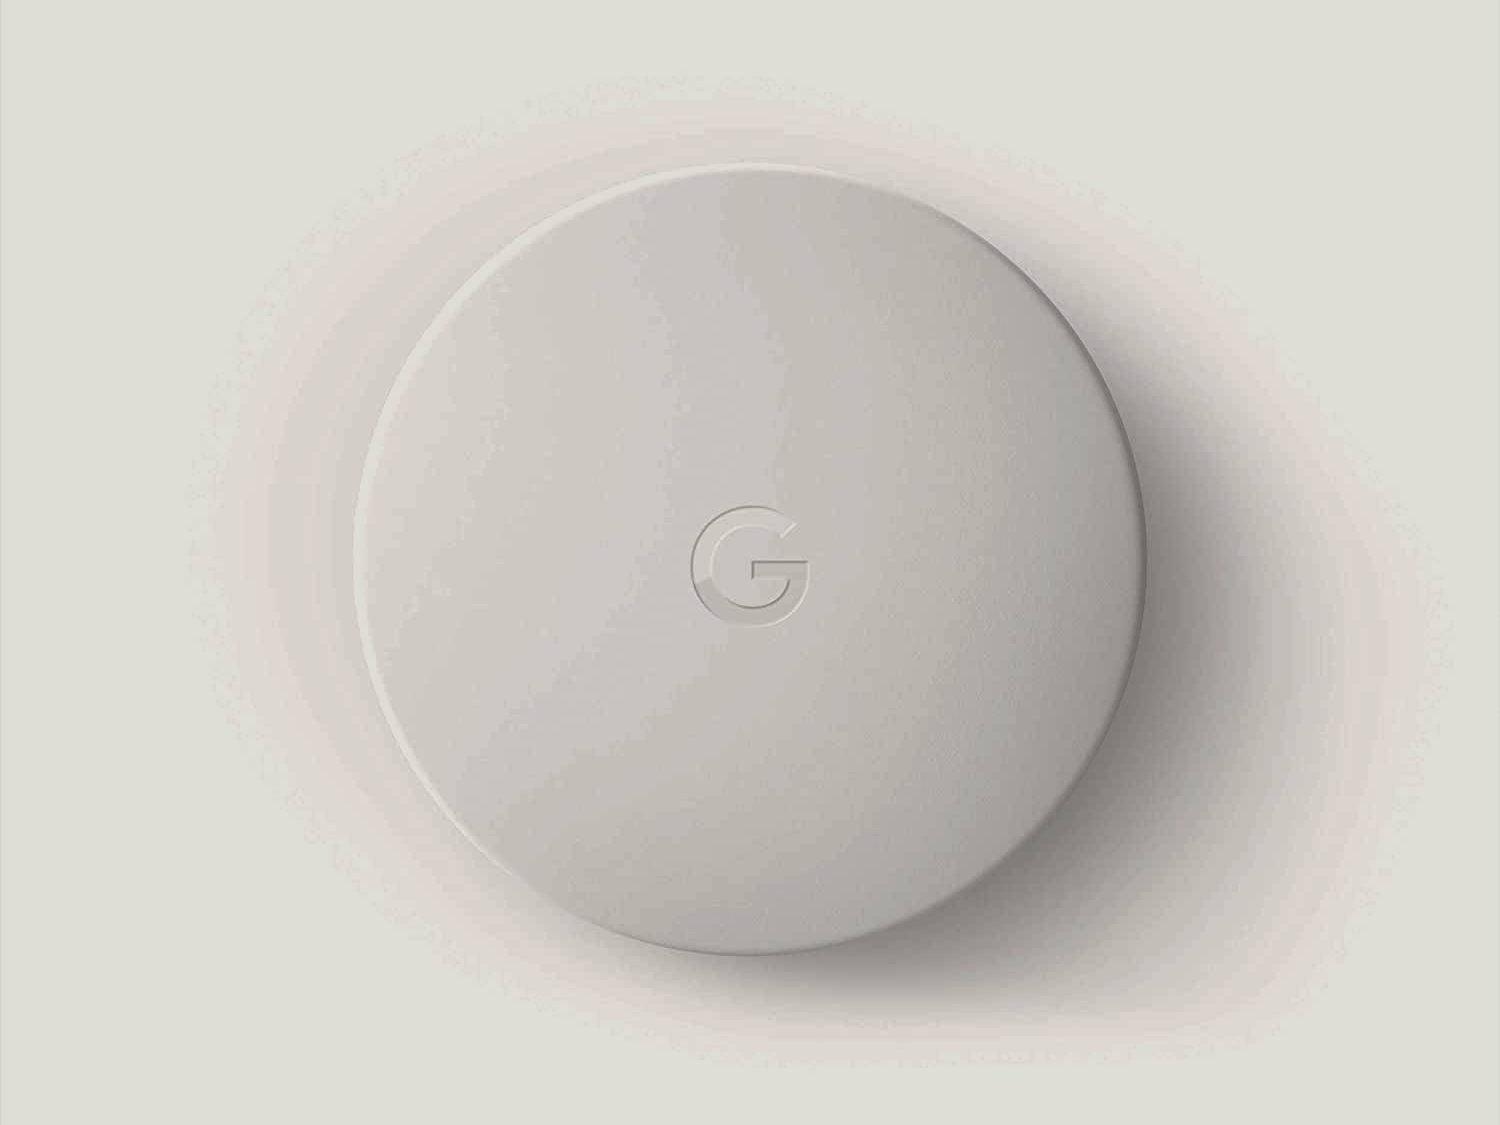 Google Nest Smart Temperature Sensor